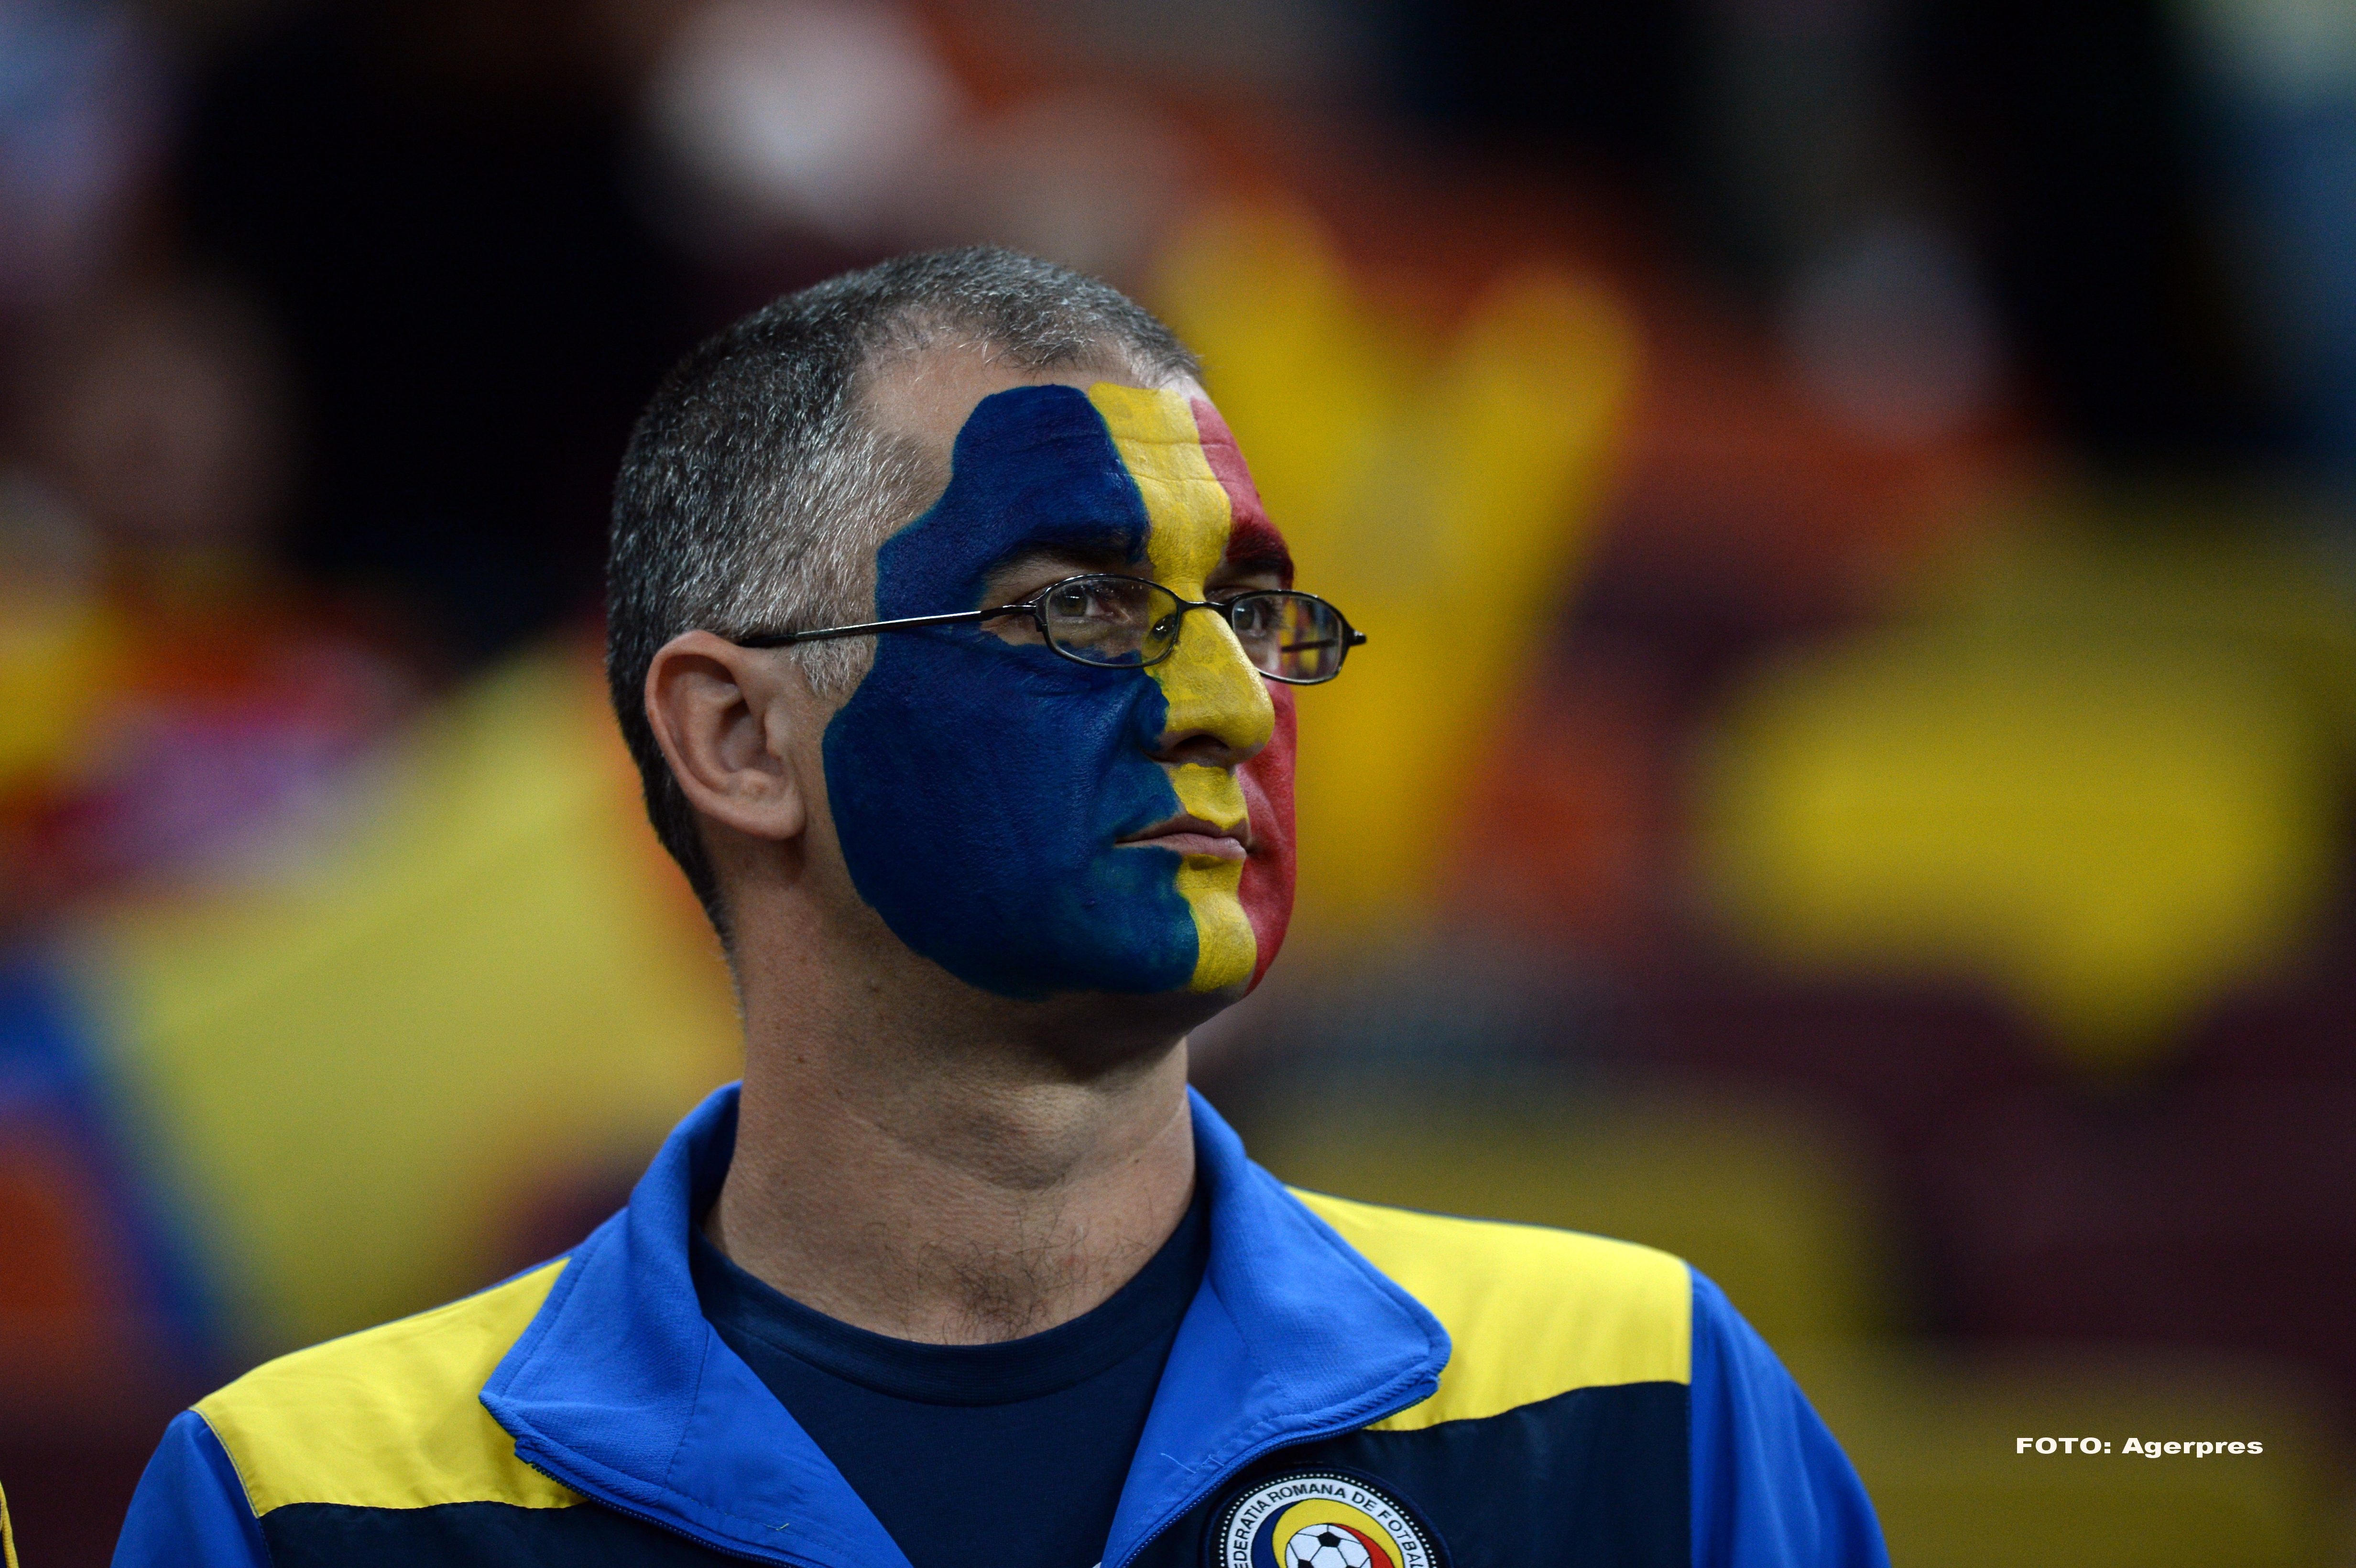 Echipa nationala a Romaniei si-a dezamagit, din nou, fanii, dupa scorul de 0-0 cu Grecia: 